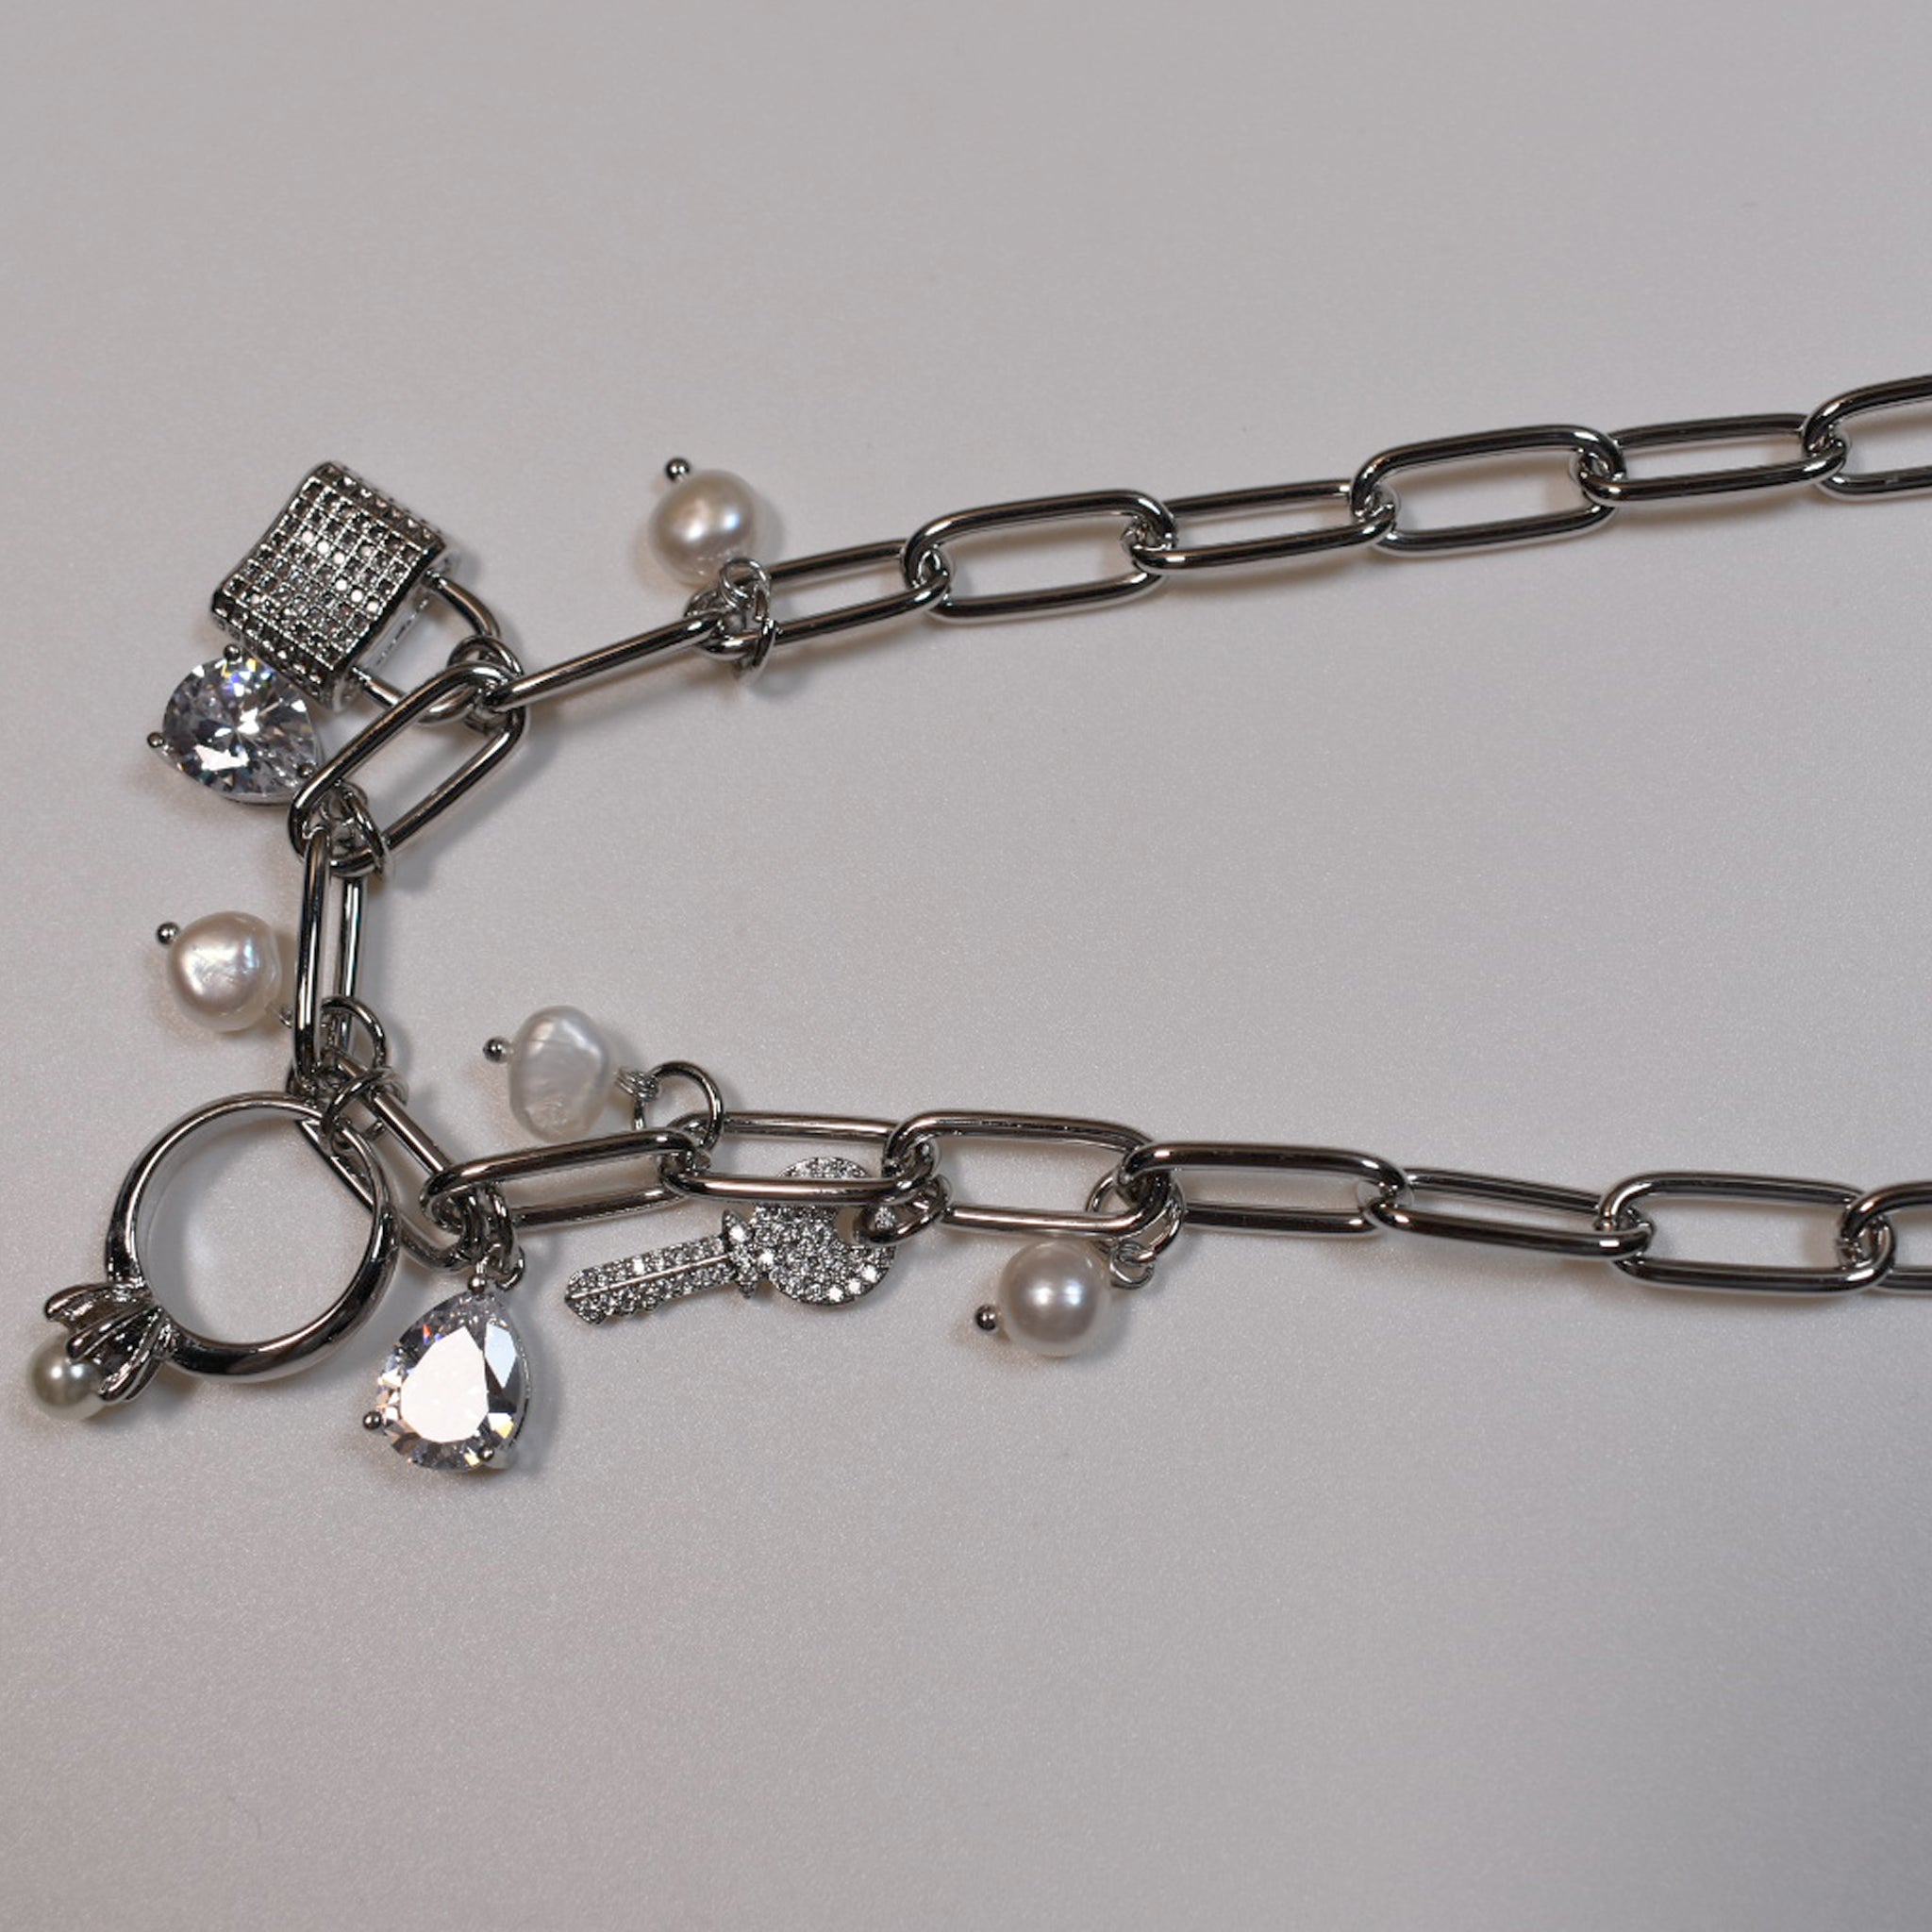 Pearls of Korea - Key Lock Chain Necklace